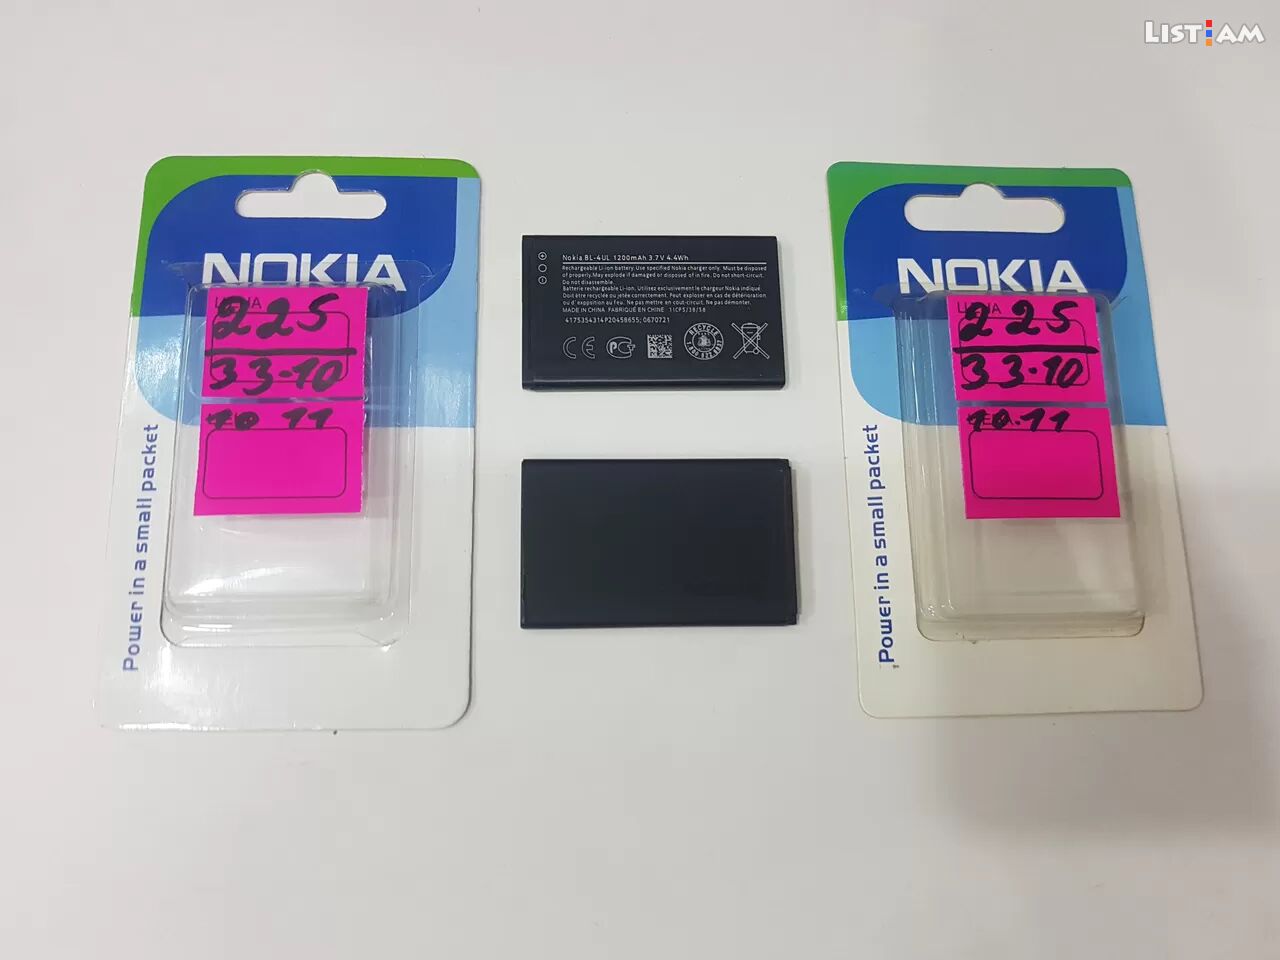 Nokia 225 battery